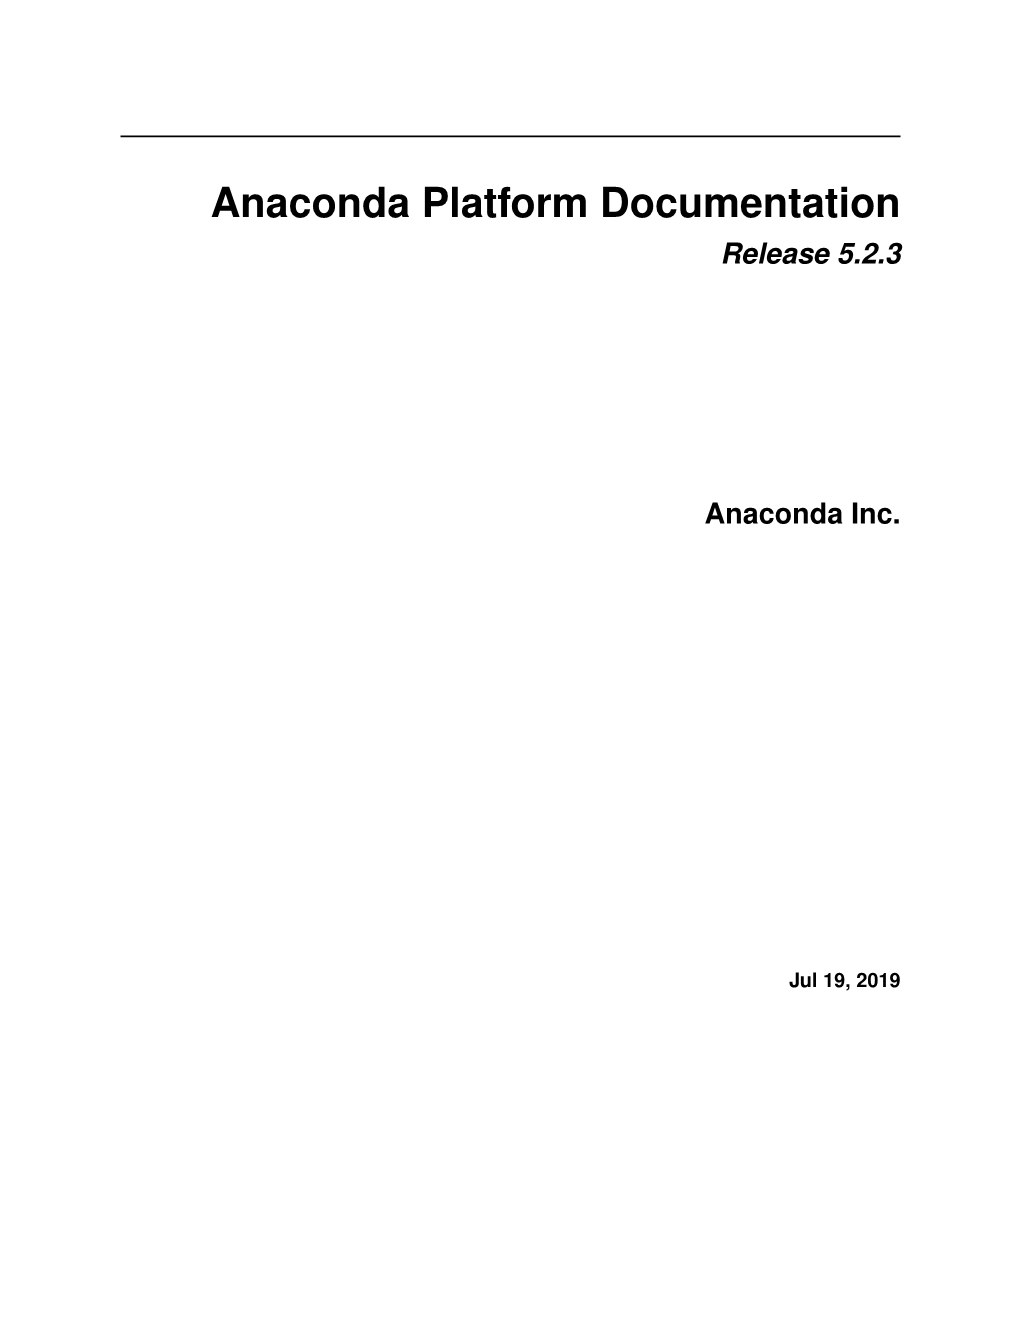 Anaconda Platform Documentation Release 5.2.3